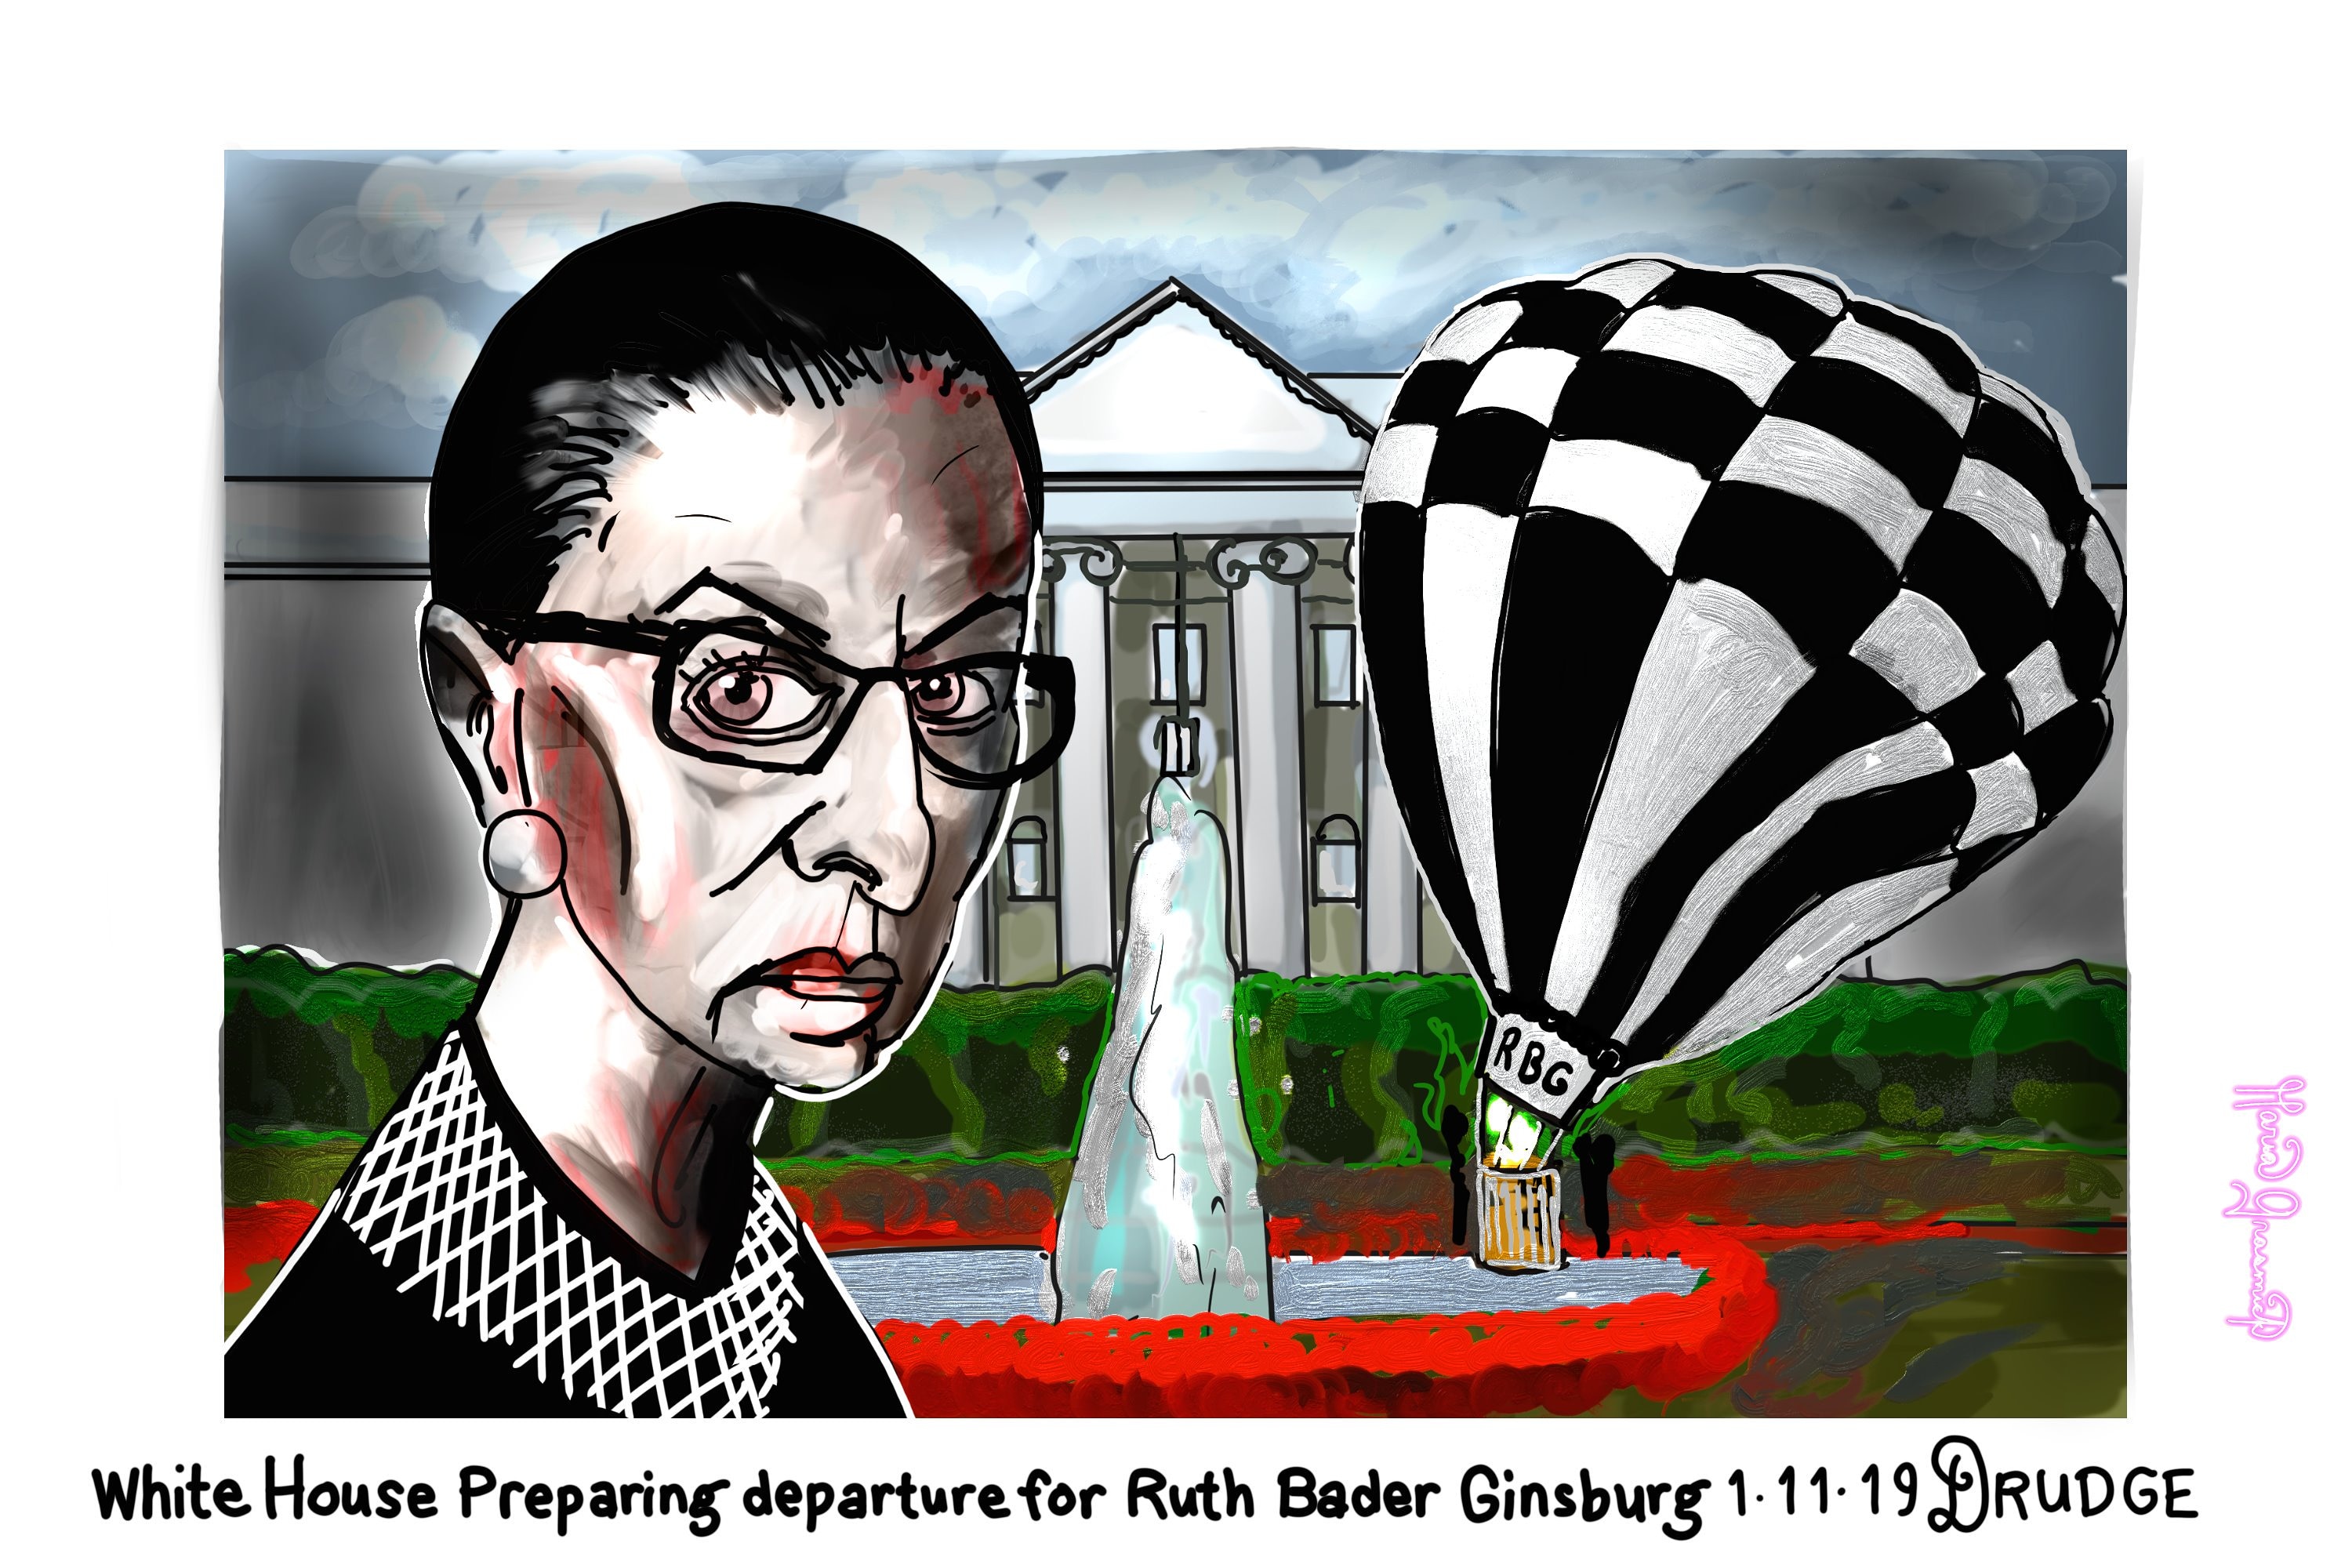 White House prepares Ruth Bader Ginsburg departure balloon political cartoon for Donald Trump 🍇 post thumbnail image